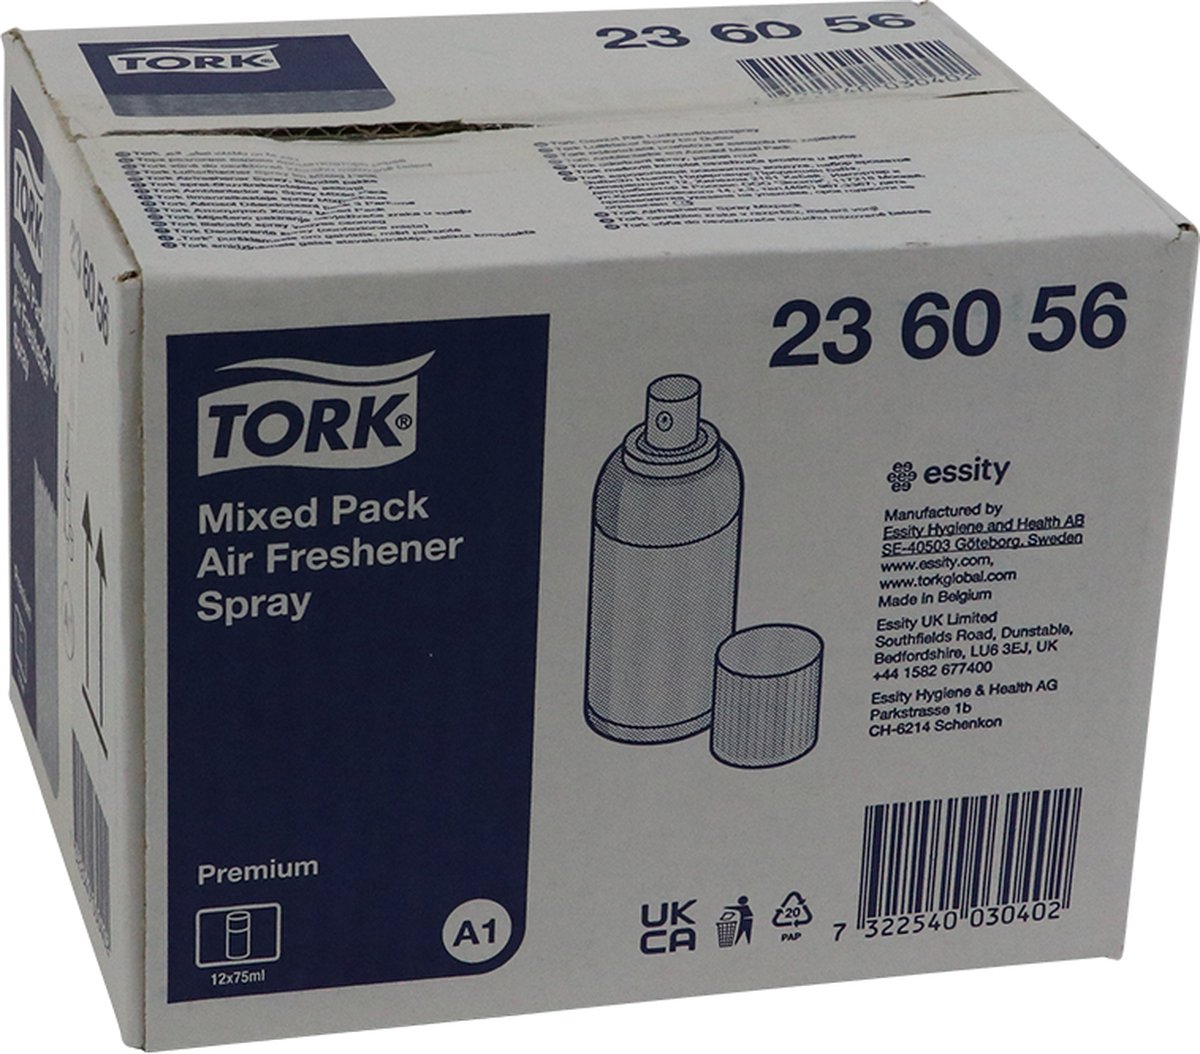 Voordeelverpakking 4 X Tork Luchtverfrisser Spray mix pakket 3 Parfums A1, aerosol, 12x75ml (236056)